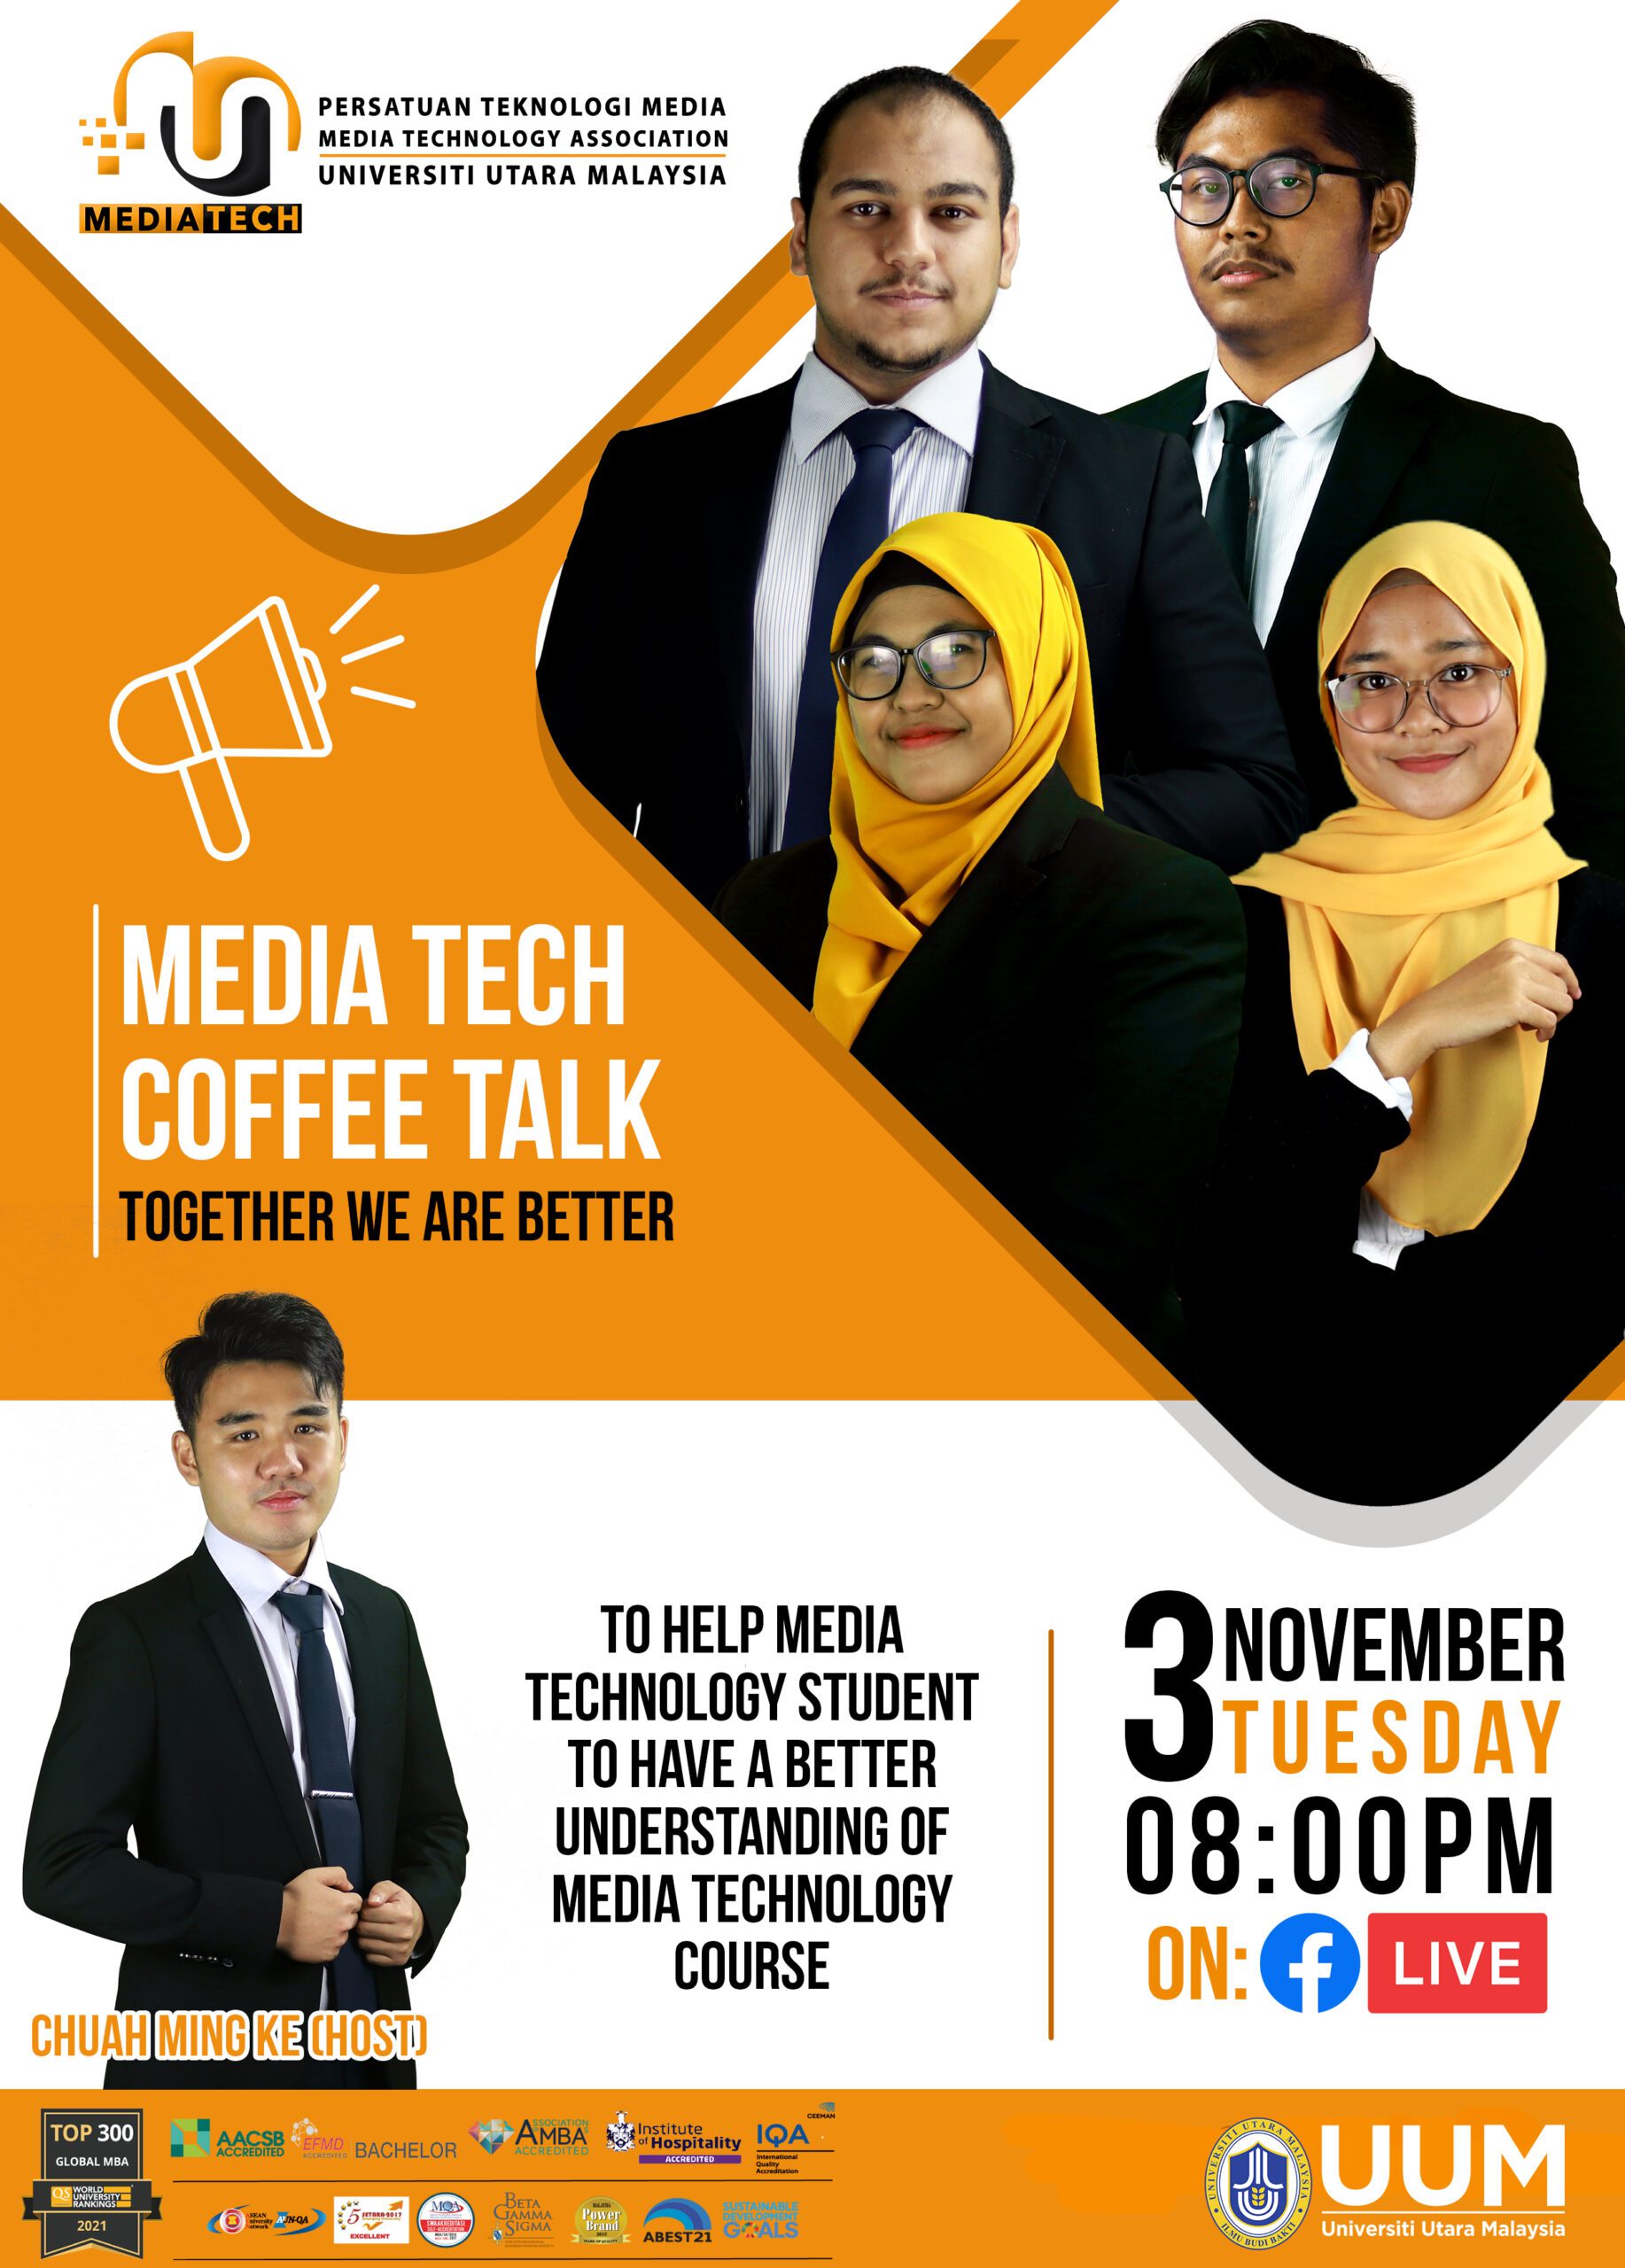 MediaTech Coffe Talk | PERMEDIA UUM